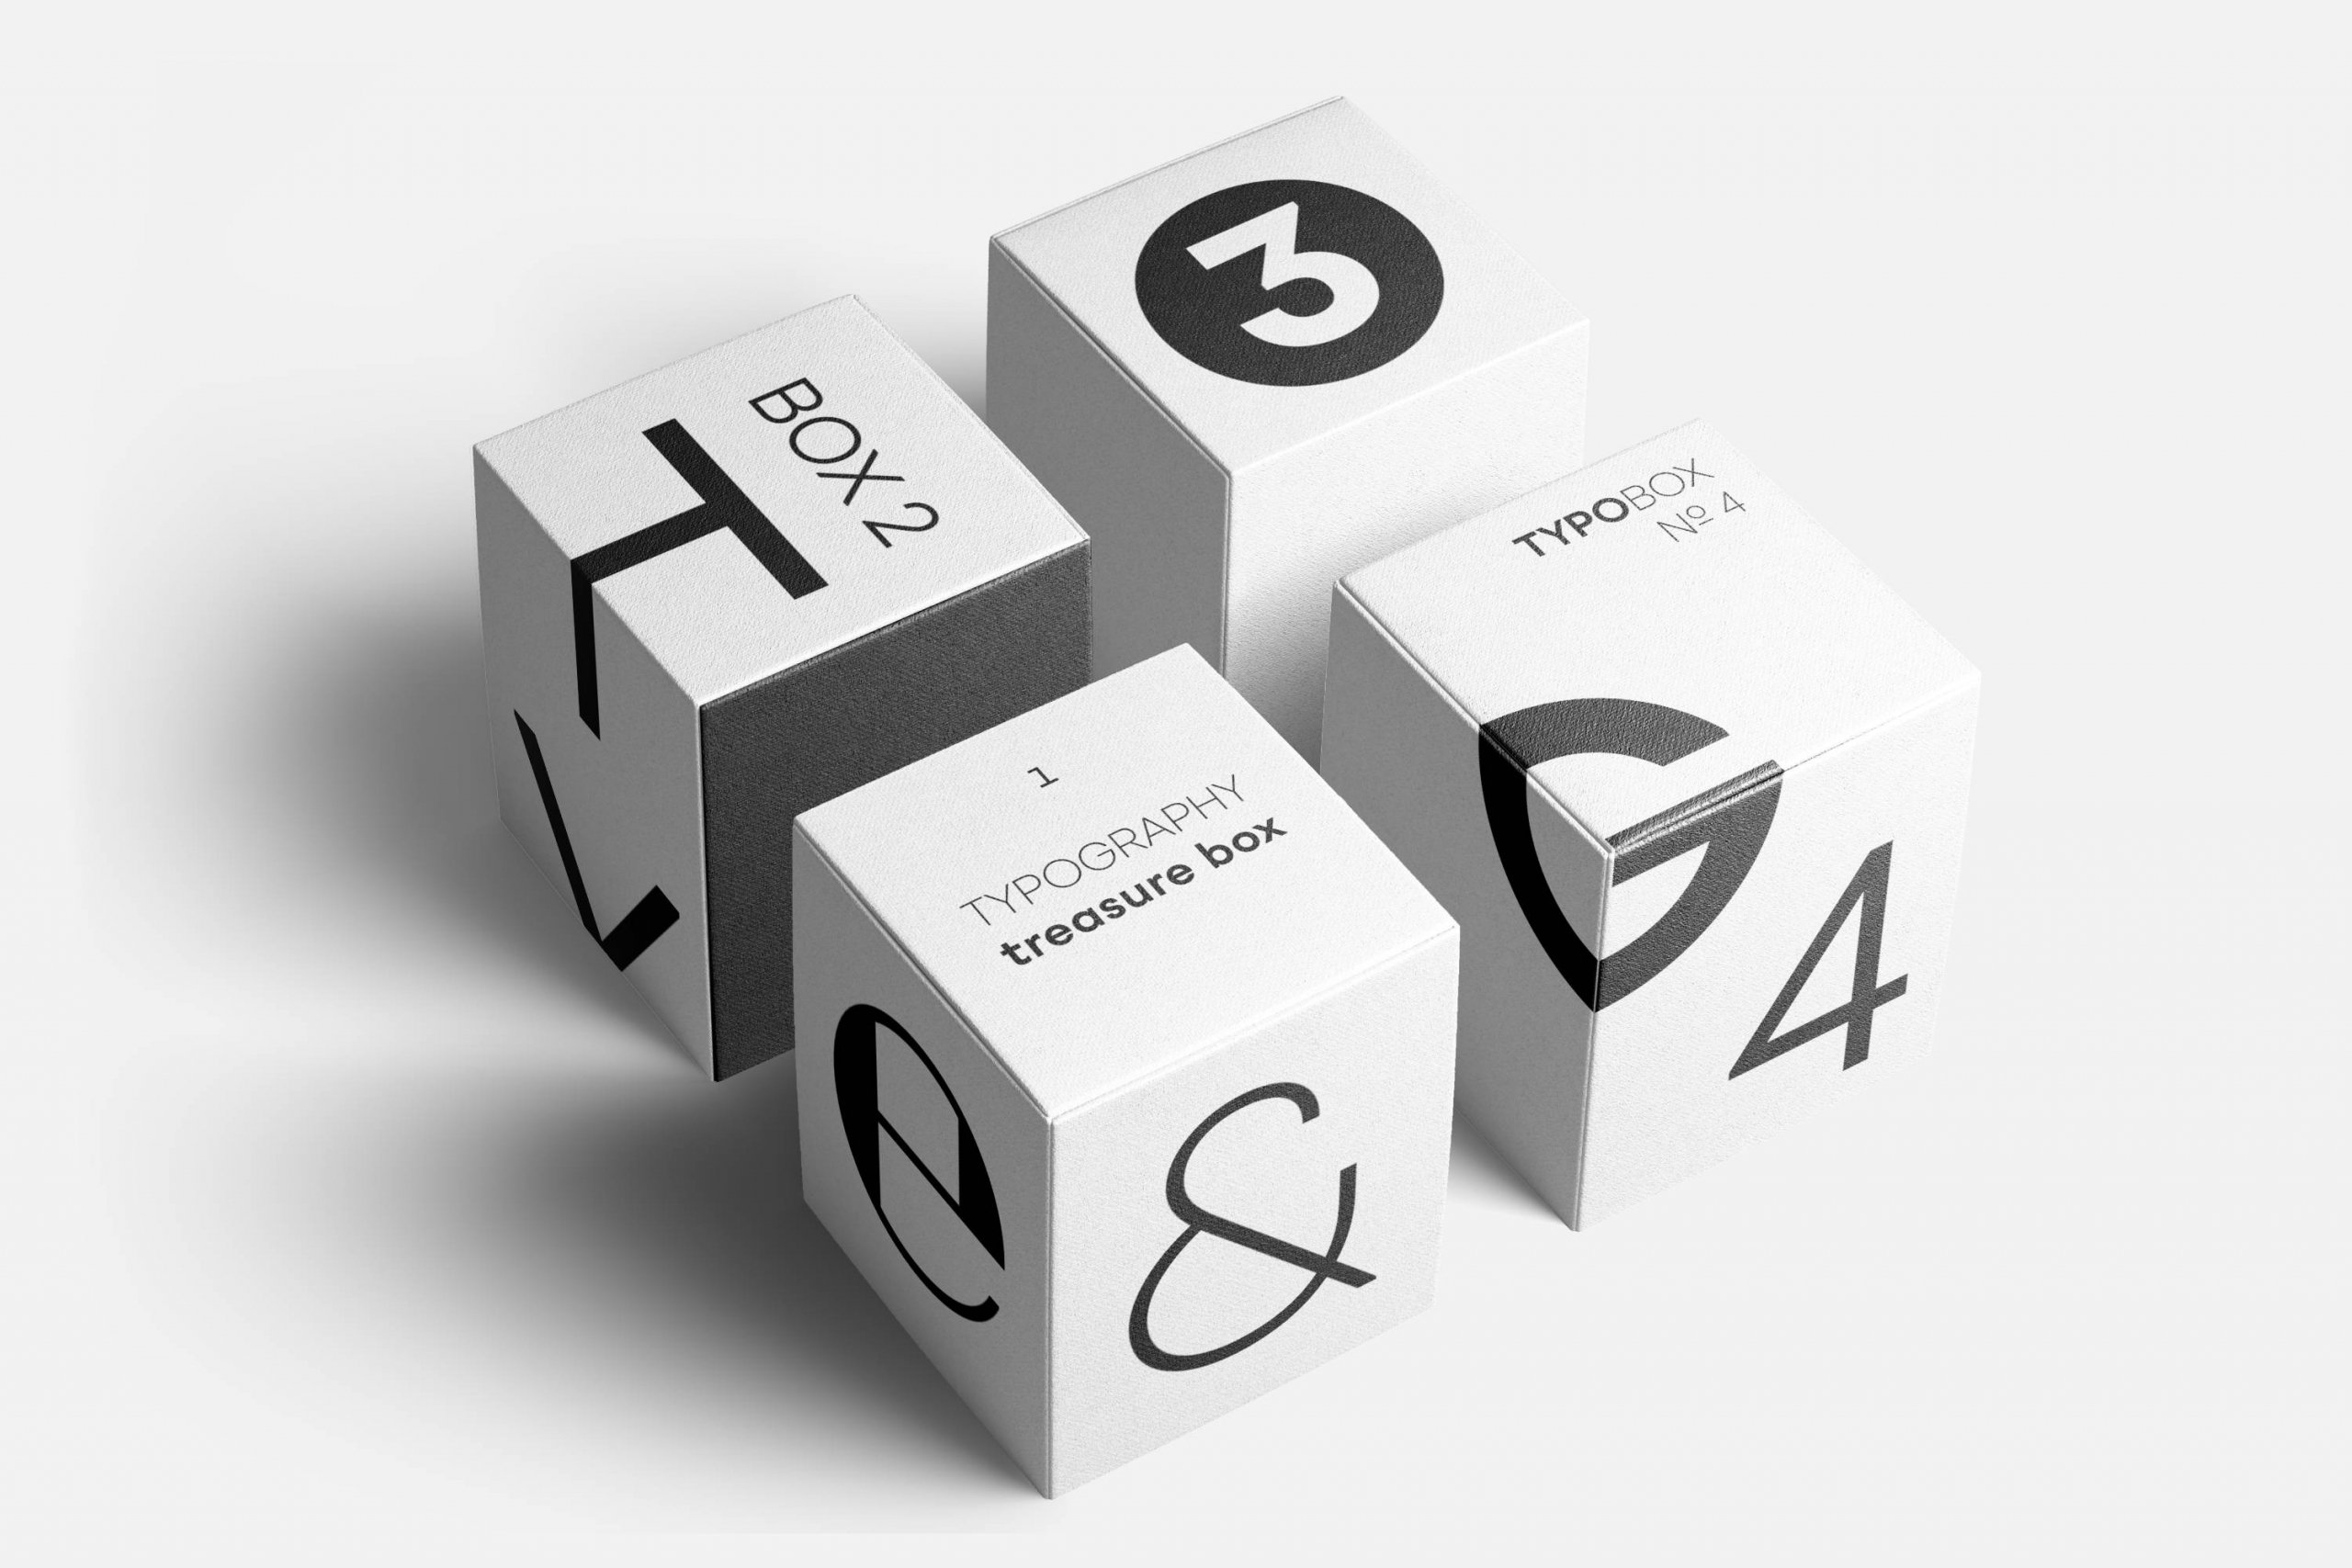 Rothorn DC - Minimalist Geometric Sans